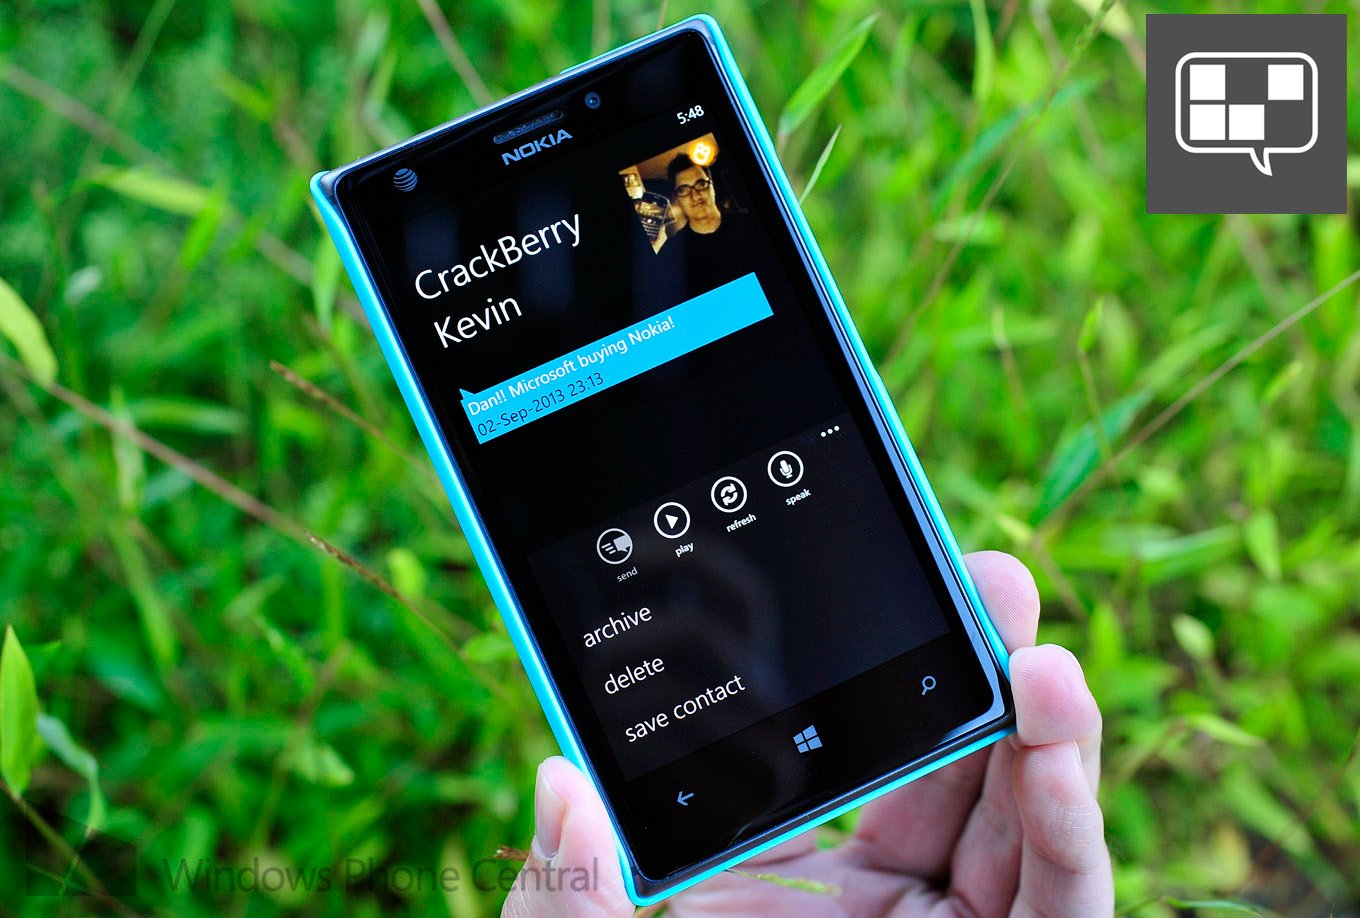 MetroTalk for Windows Phone